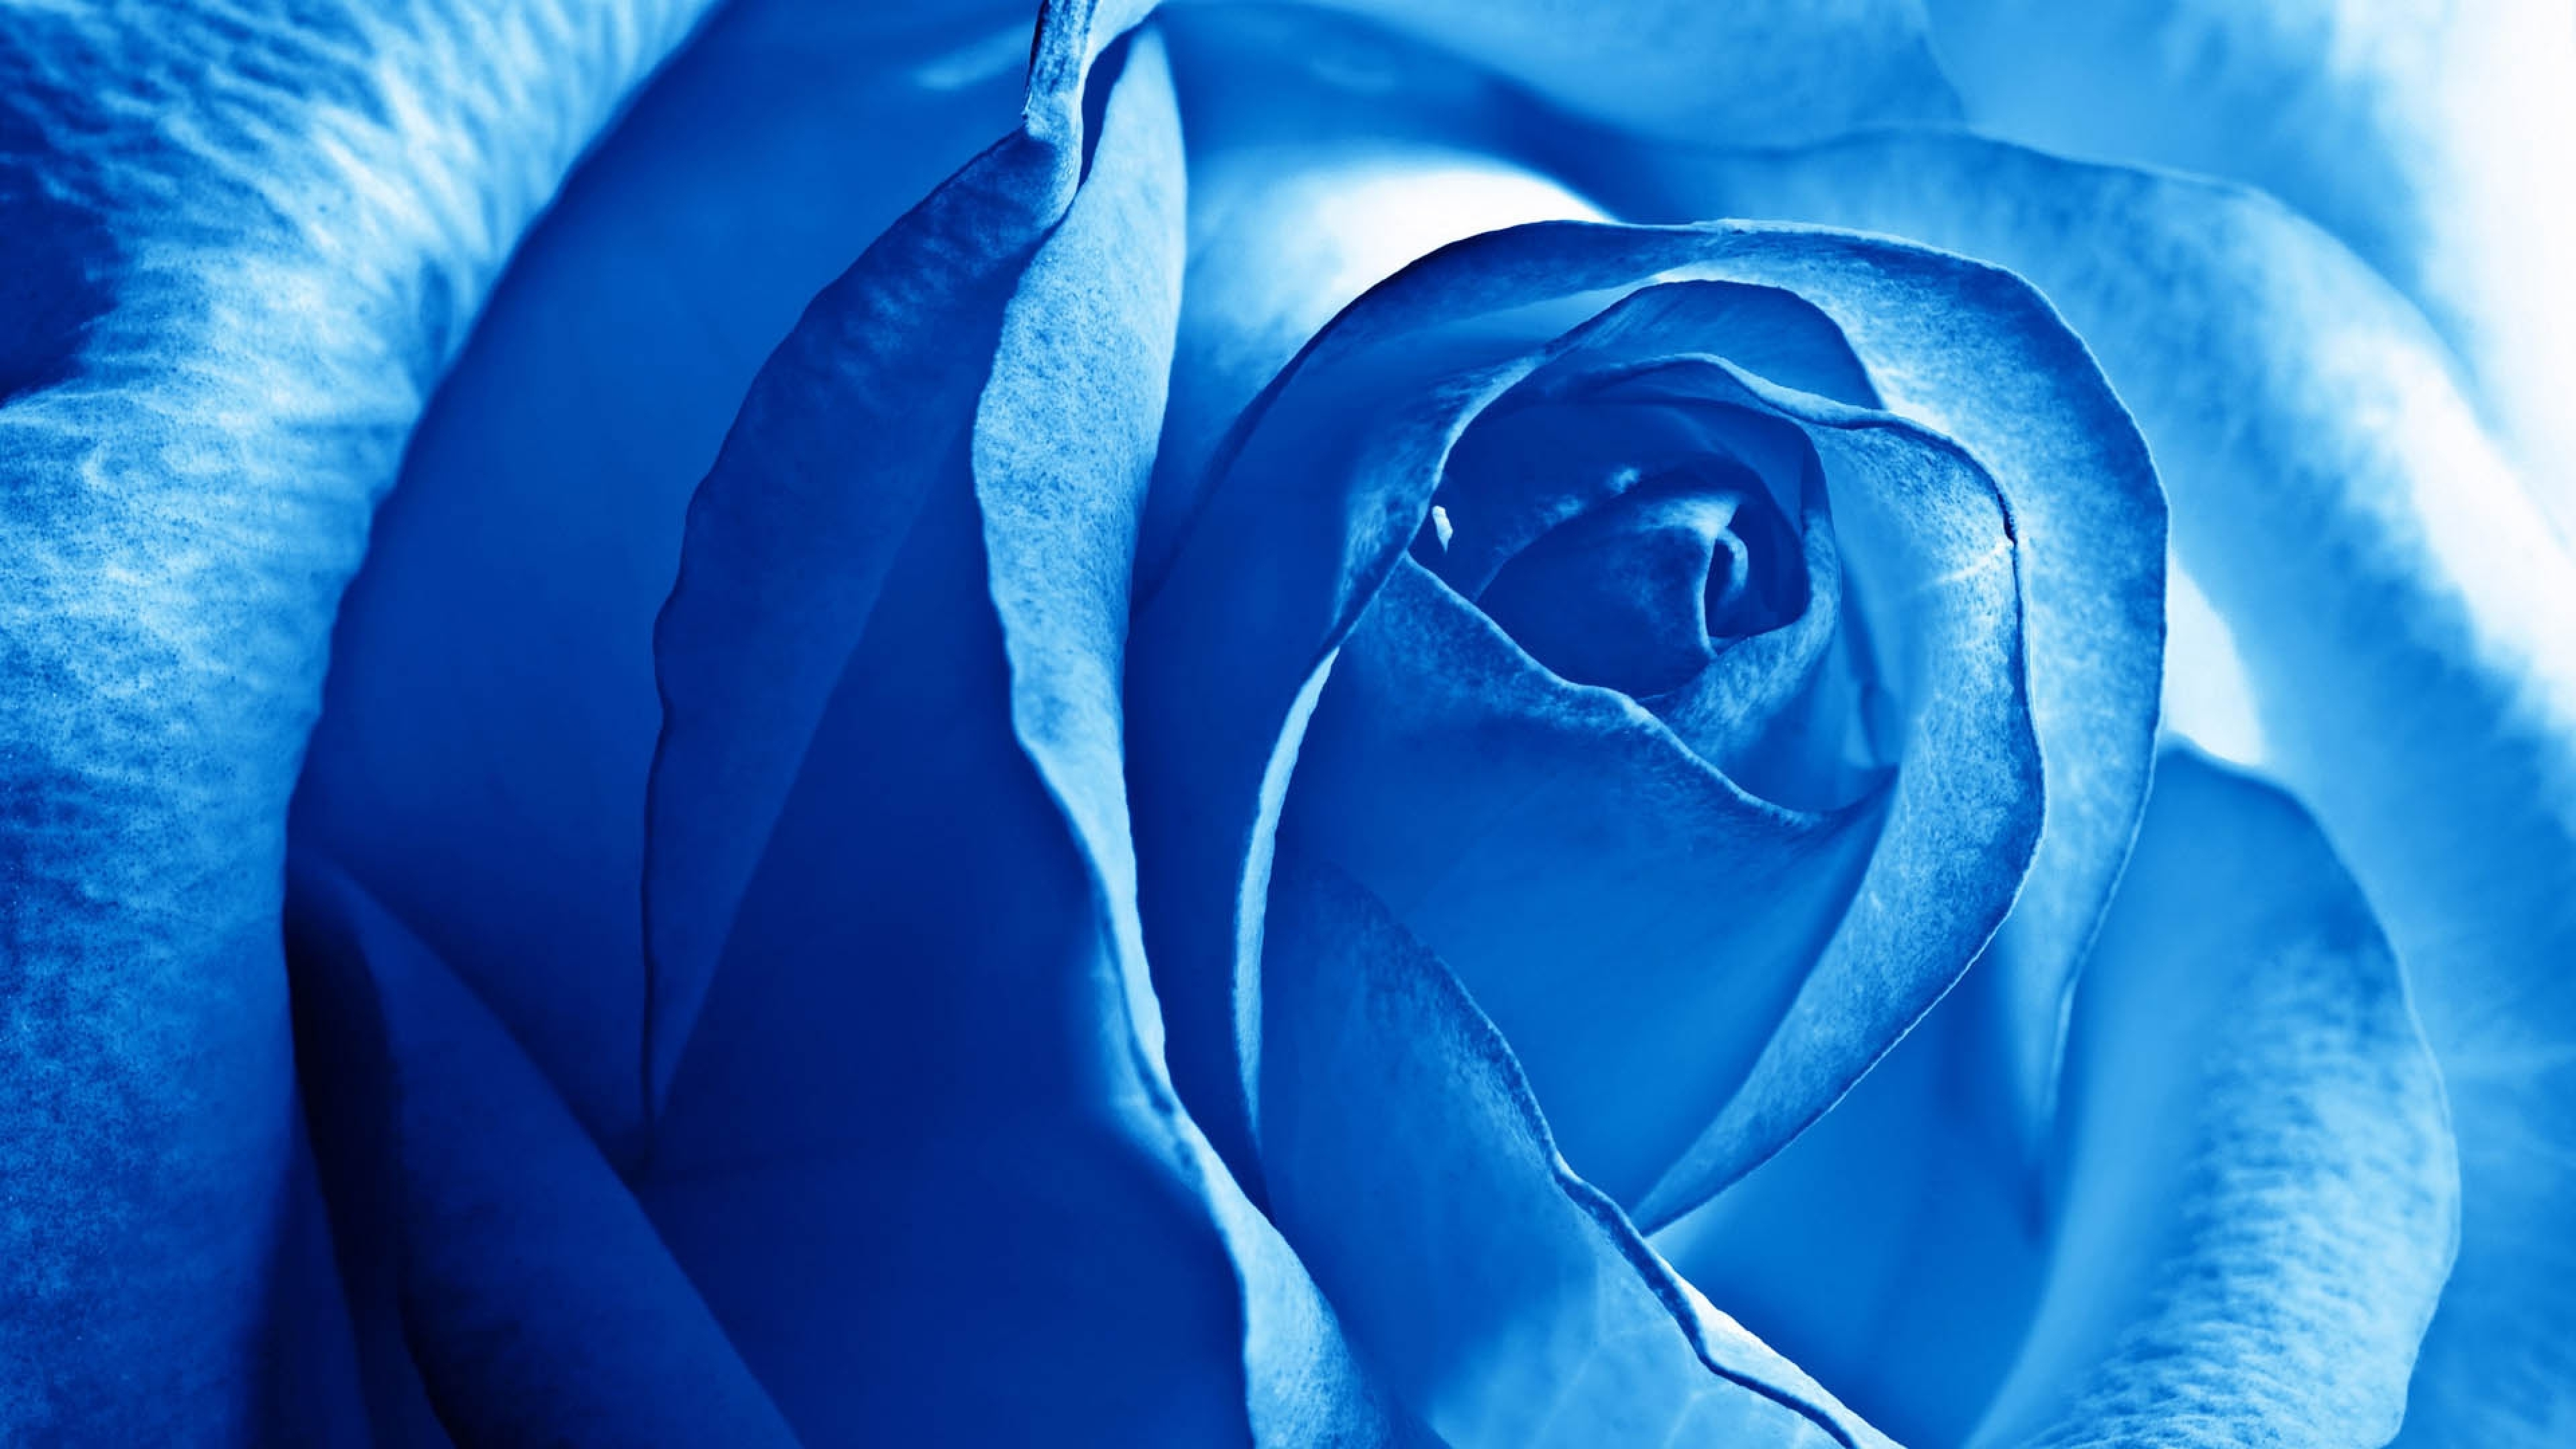 Blue Rose iPhone 12 Wallpaper 4K